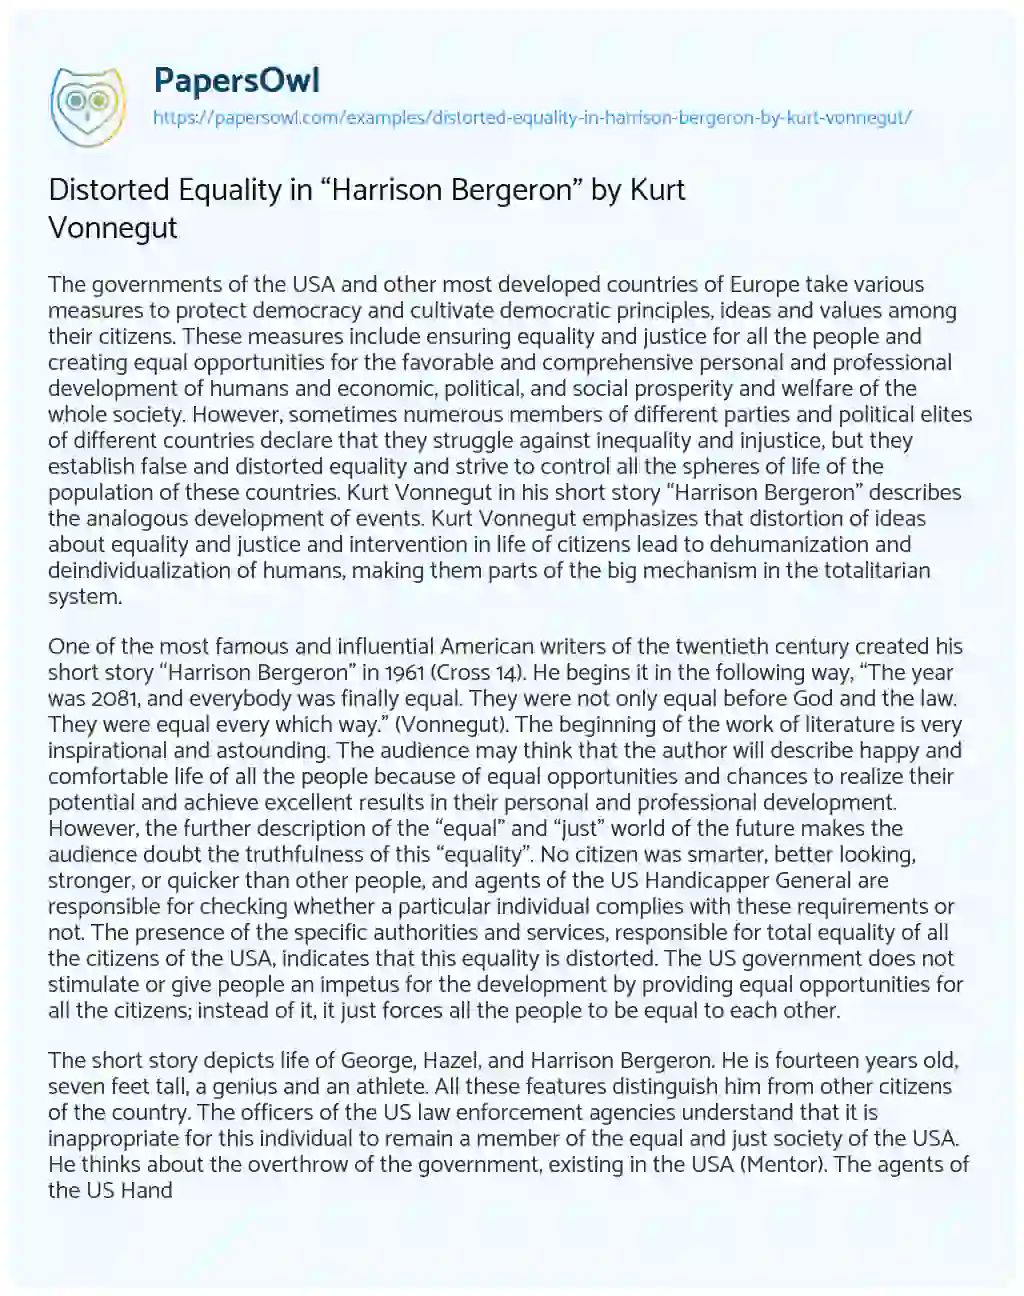 Essay on Distorted Equality in “Harrison Bergeron” by Kurt Vonnegut